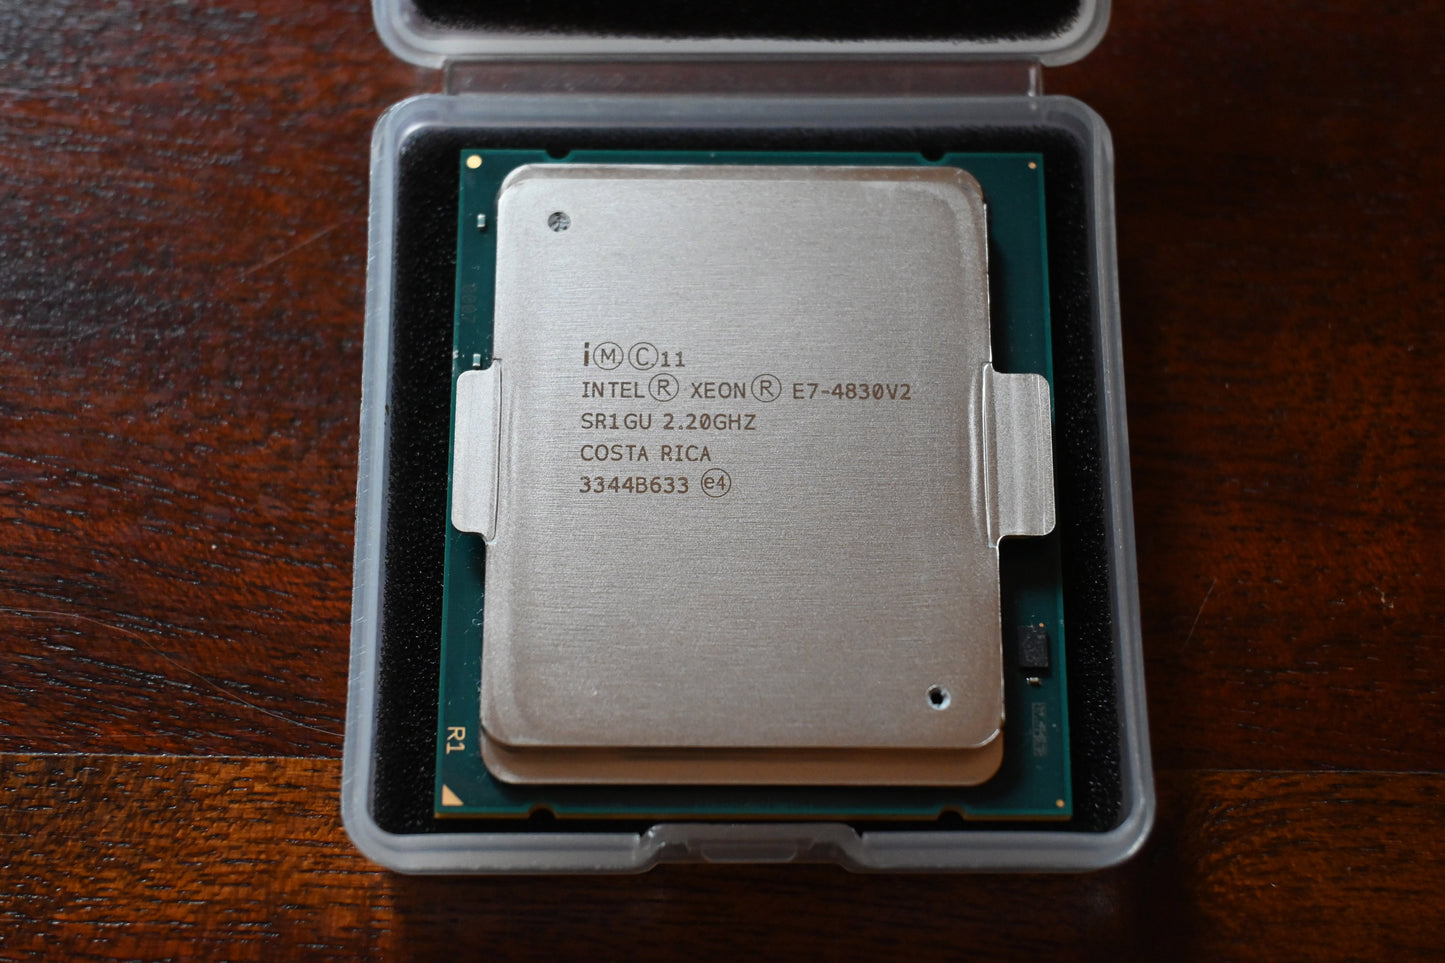 Intel XEON E7-4830V2 - SR1GU - Tested